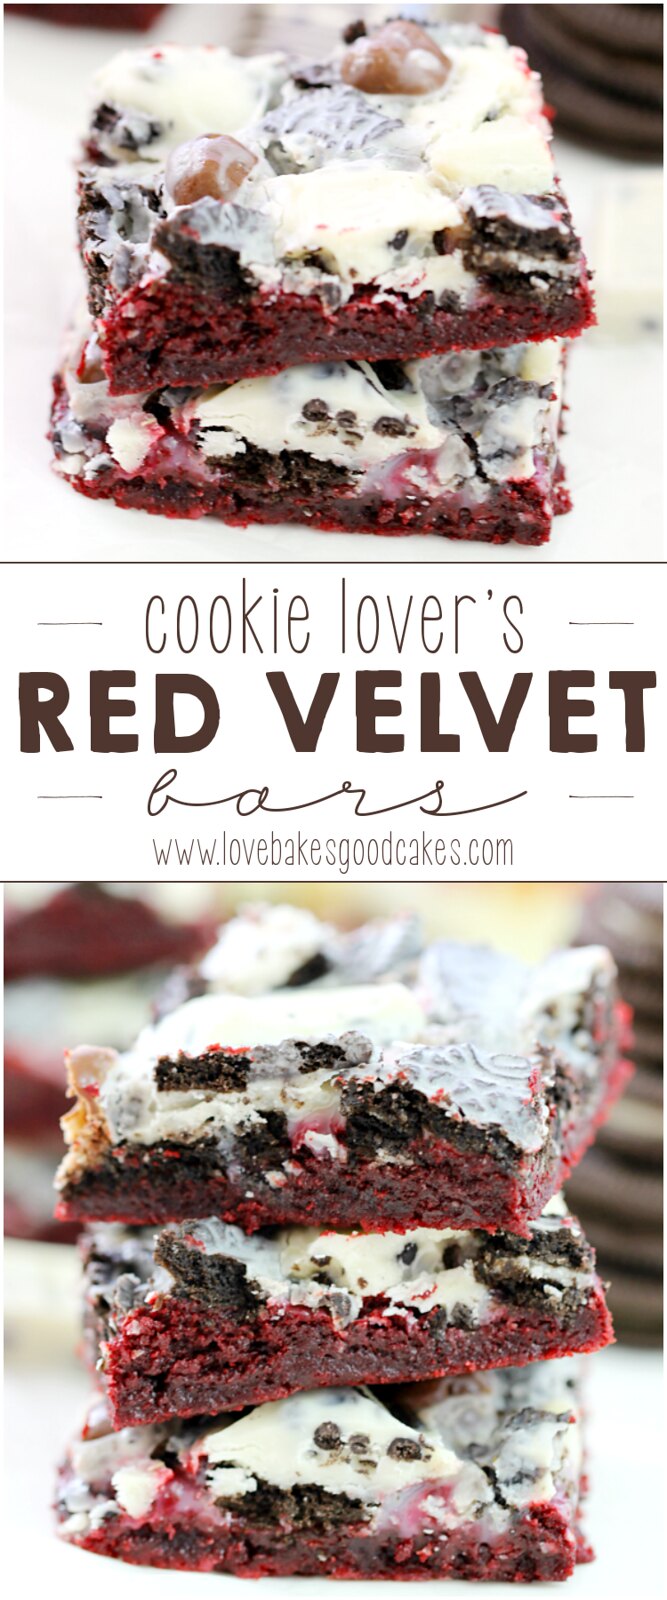 Cookie Lover's Red Velvet Bars collage.